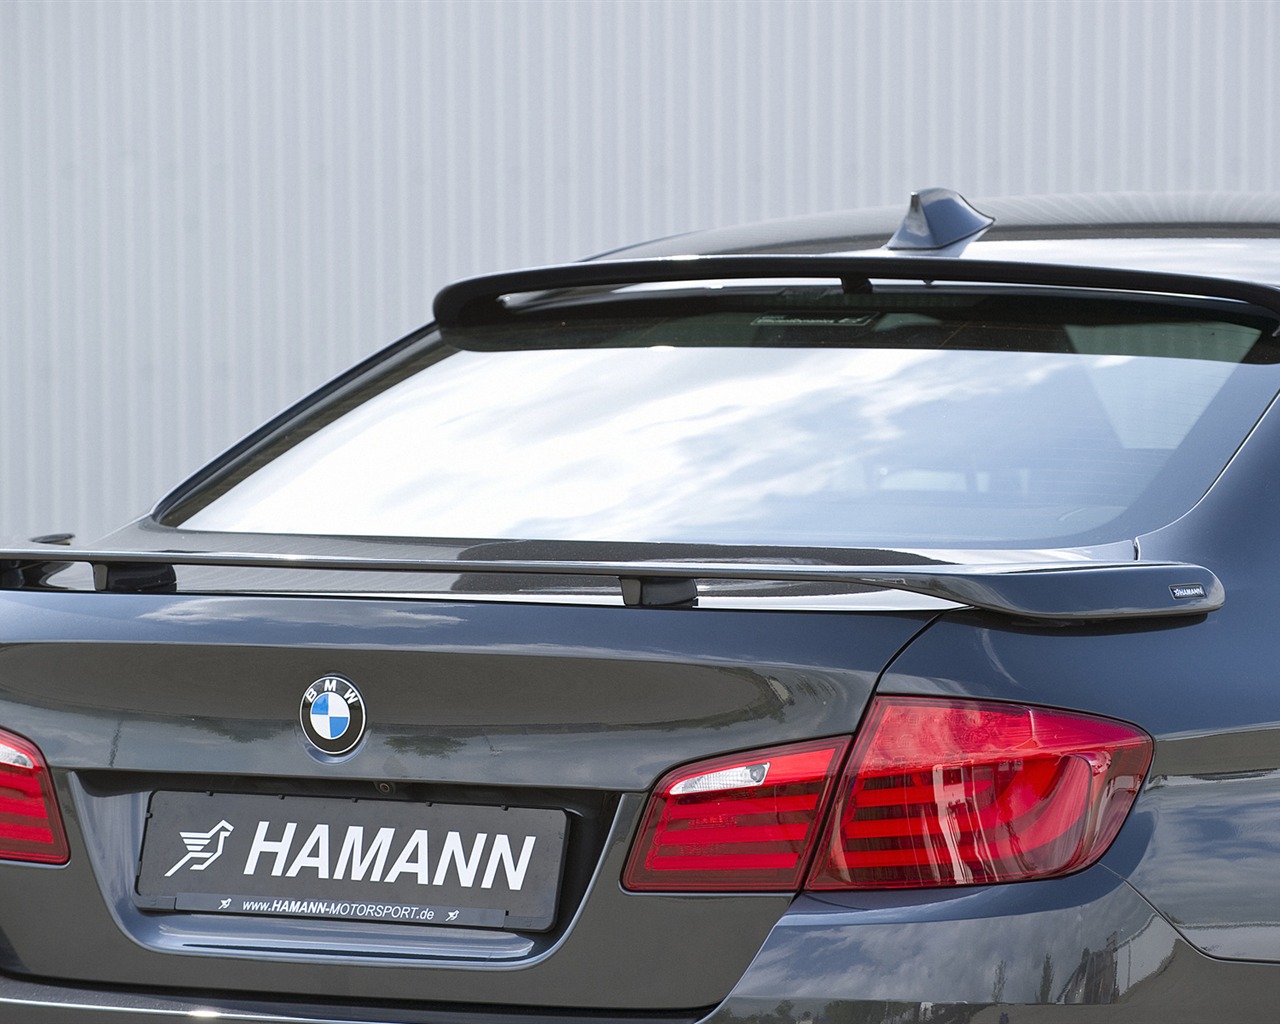 Hamann BMW 5-series F10 - 2010 寶馬 #17 - 1280x1024